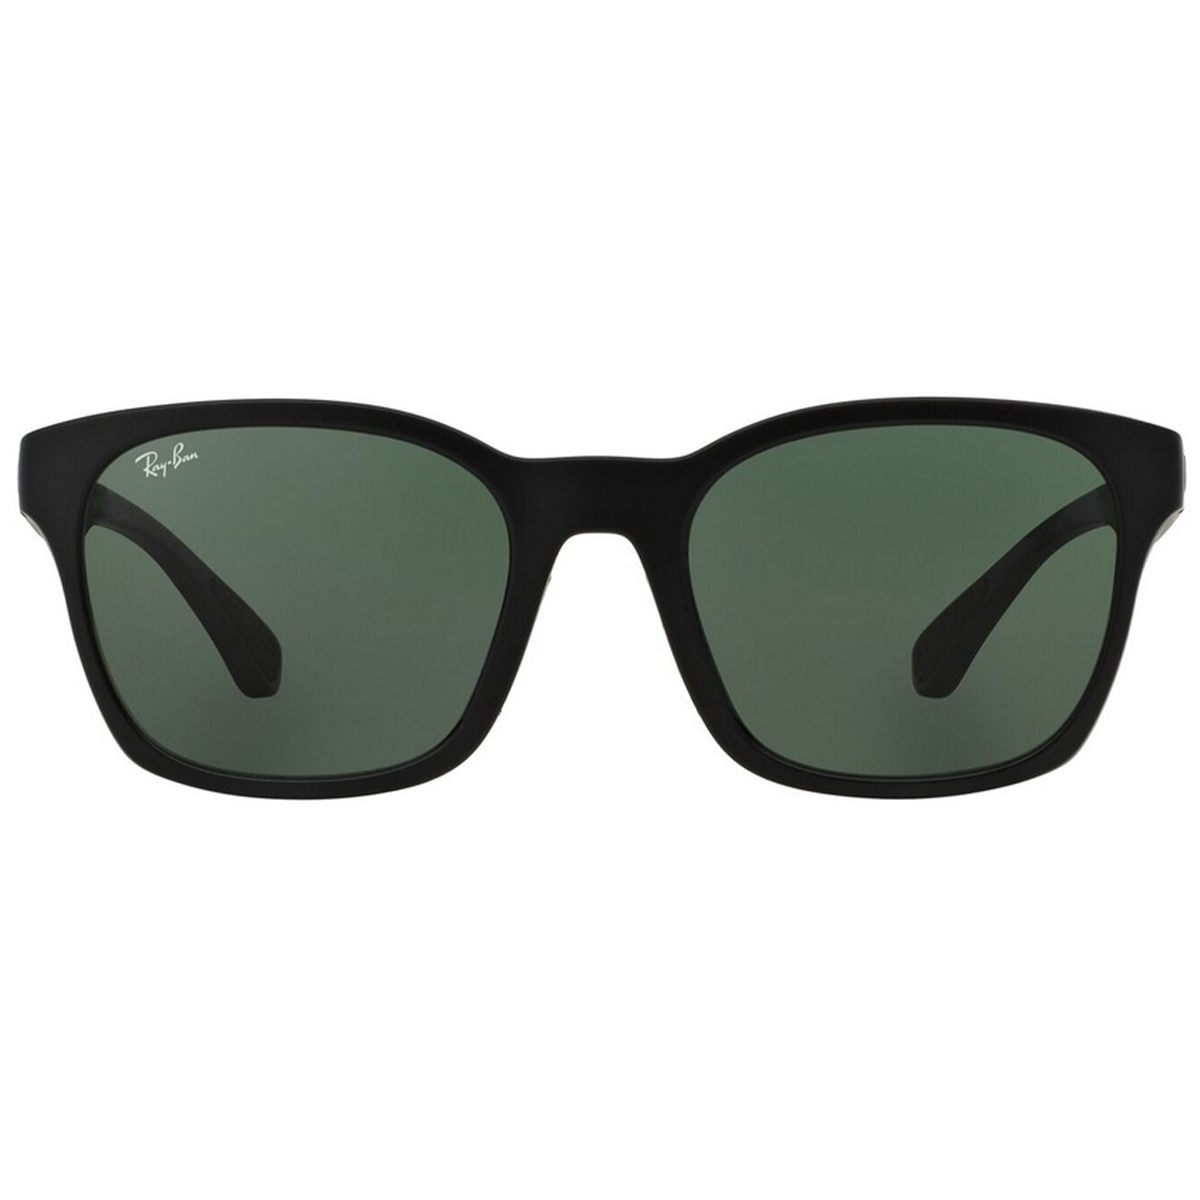 Rayban Mens Matte Black Frame With Green Lens Sunglass